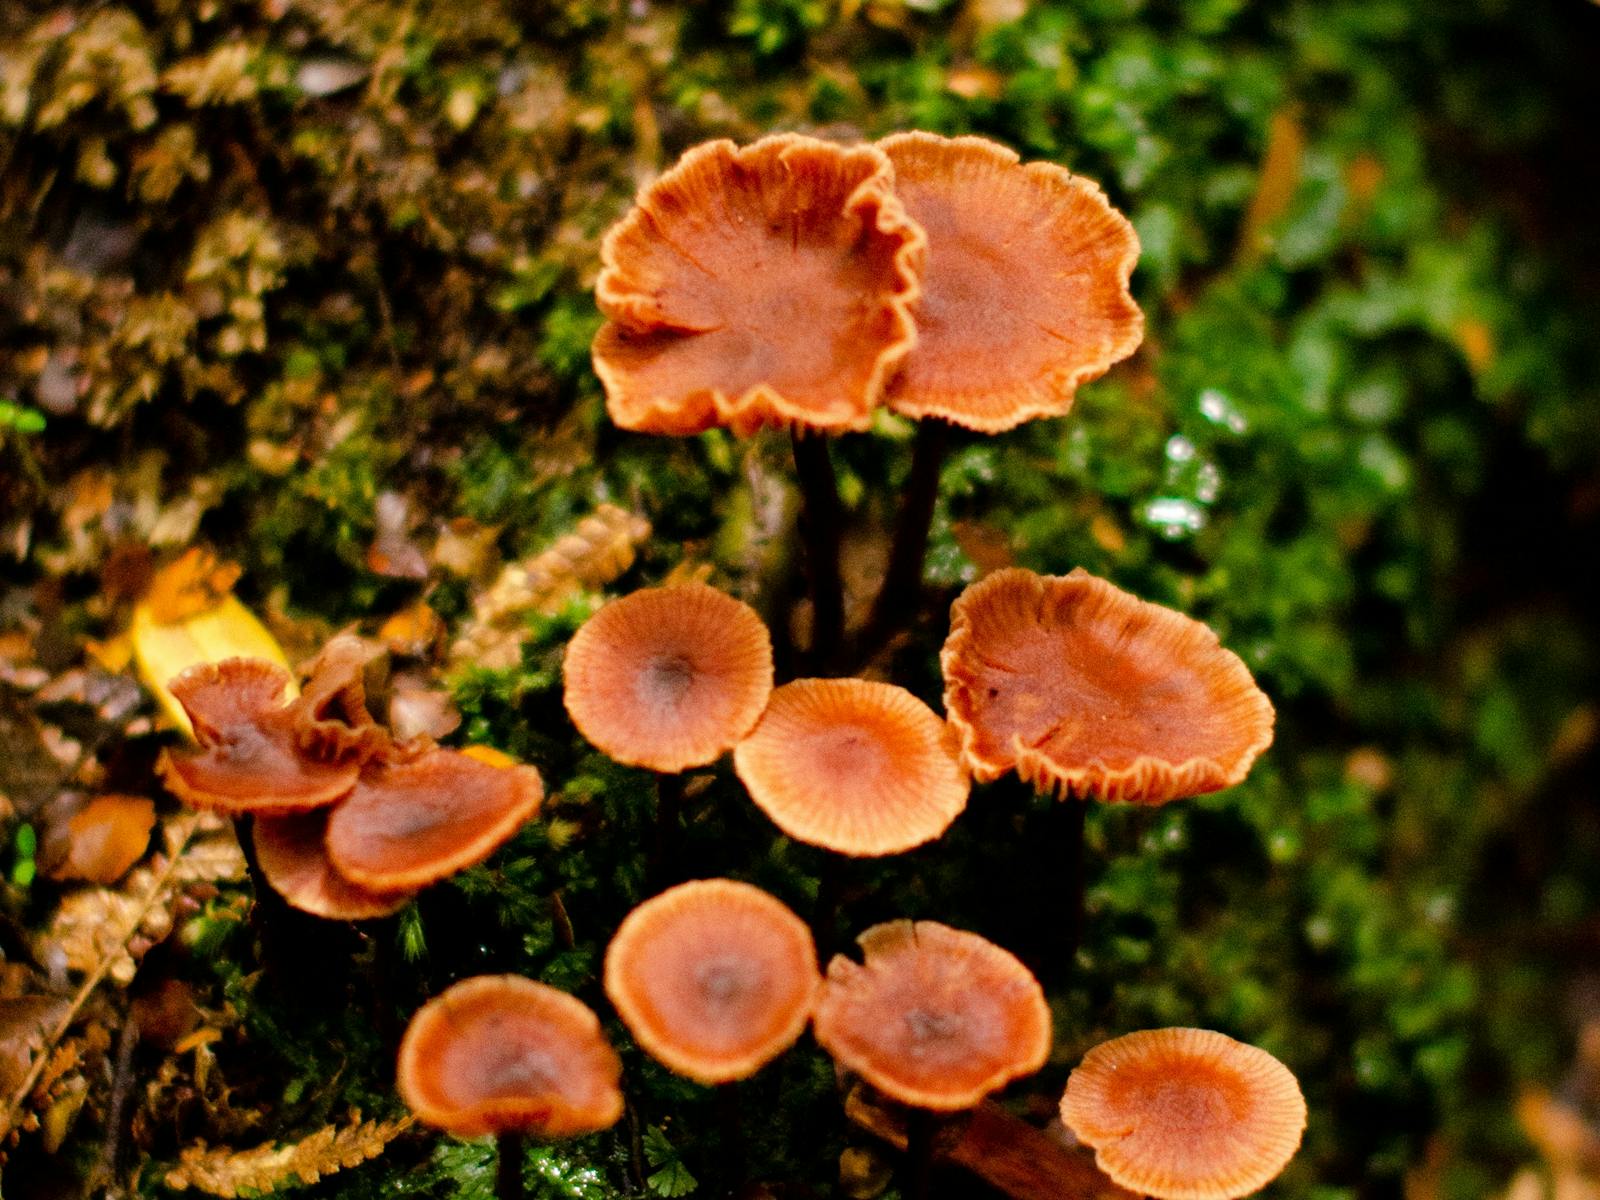 Cluster of orange ruffle-edged fungus at base of tree